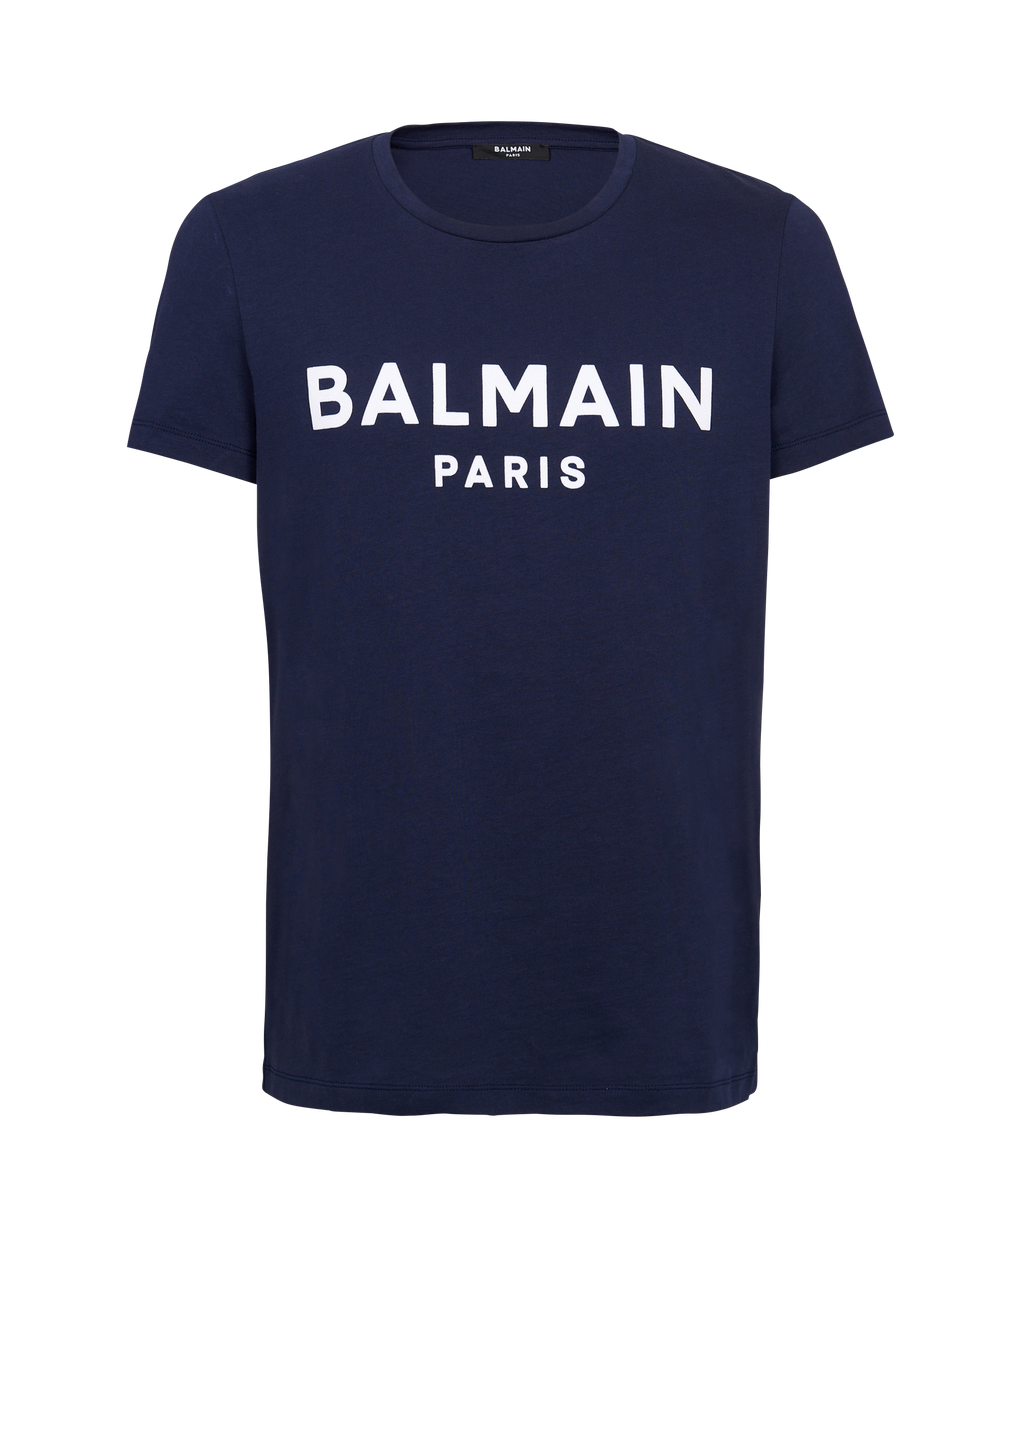 T-shirt en coton floqué logo Balmain Paris, bleu marine, hi-res